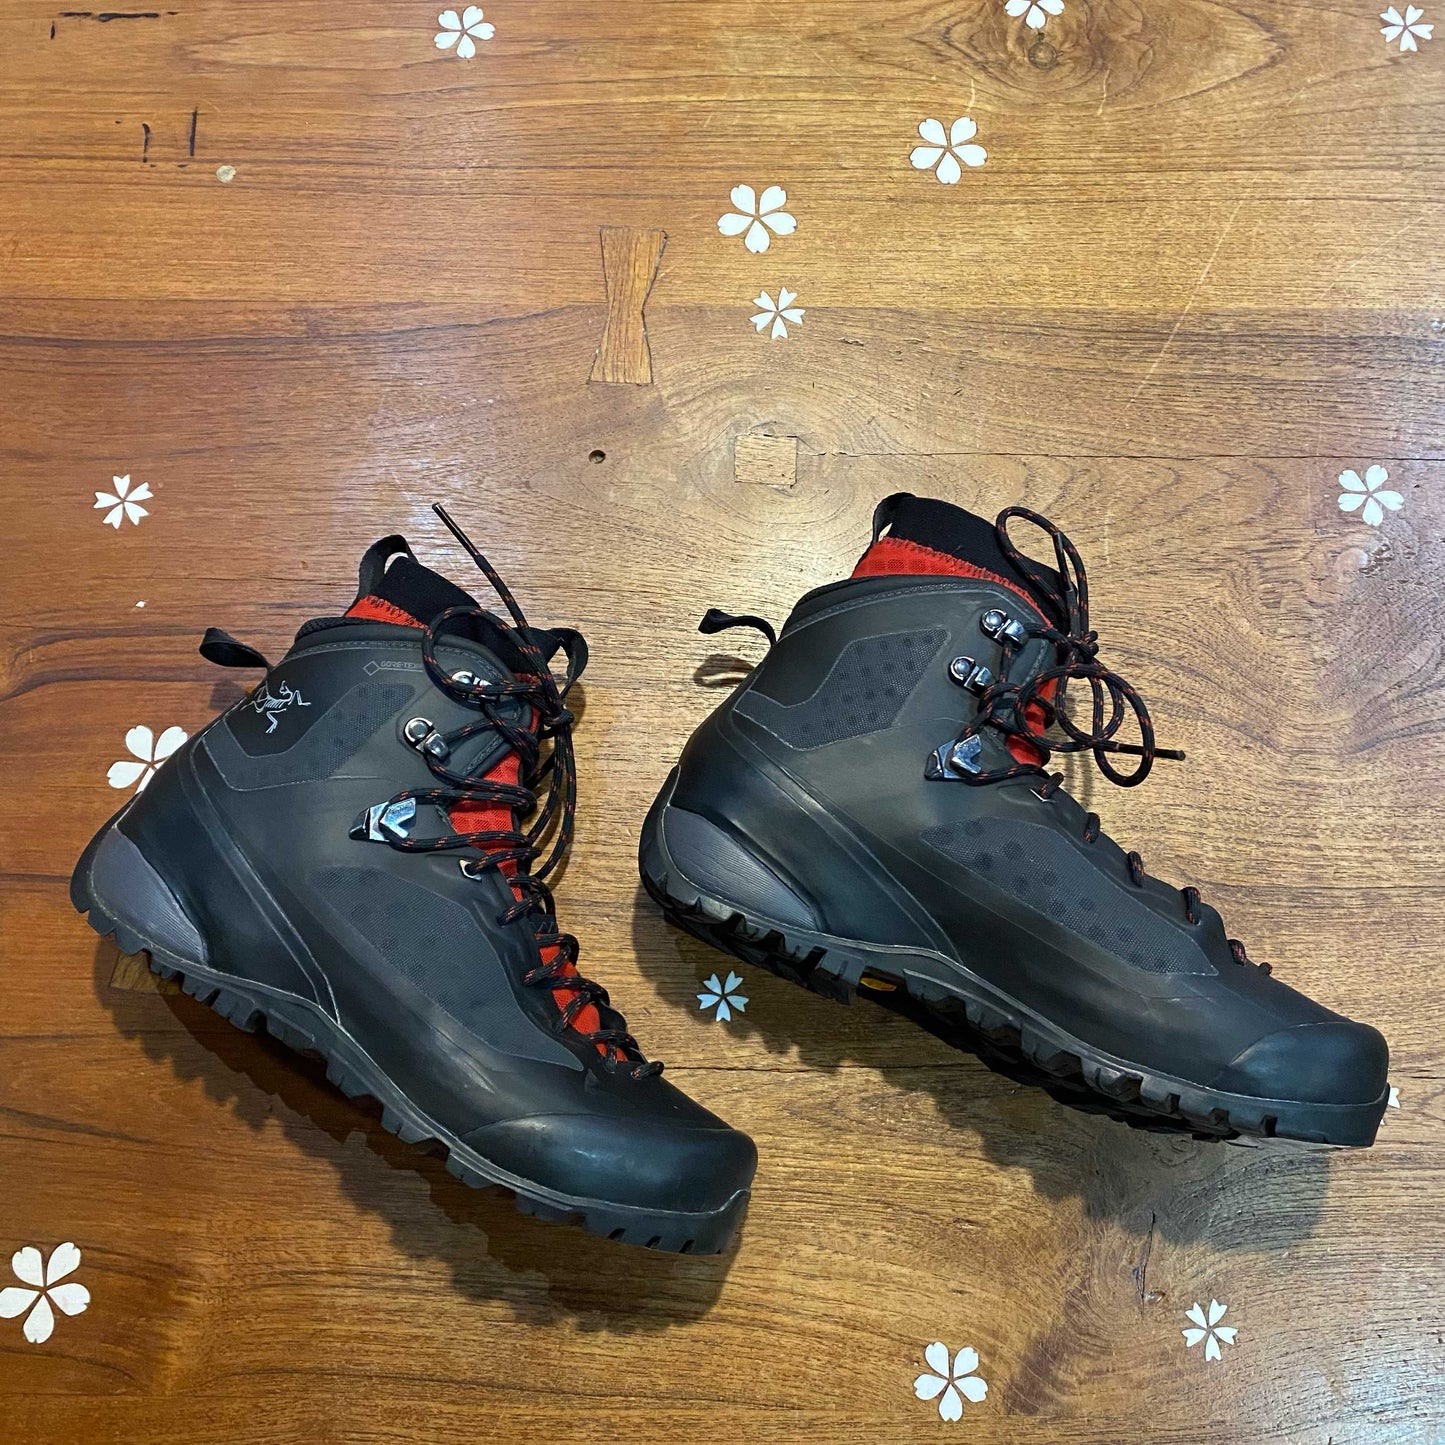 arc'teryx acrux TR gore-tex hiking boot - size M7/W9